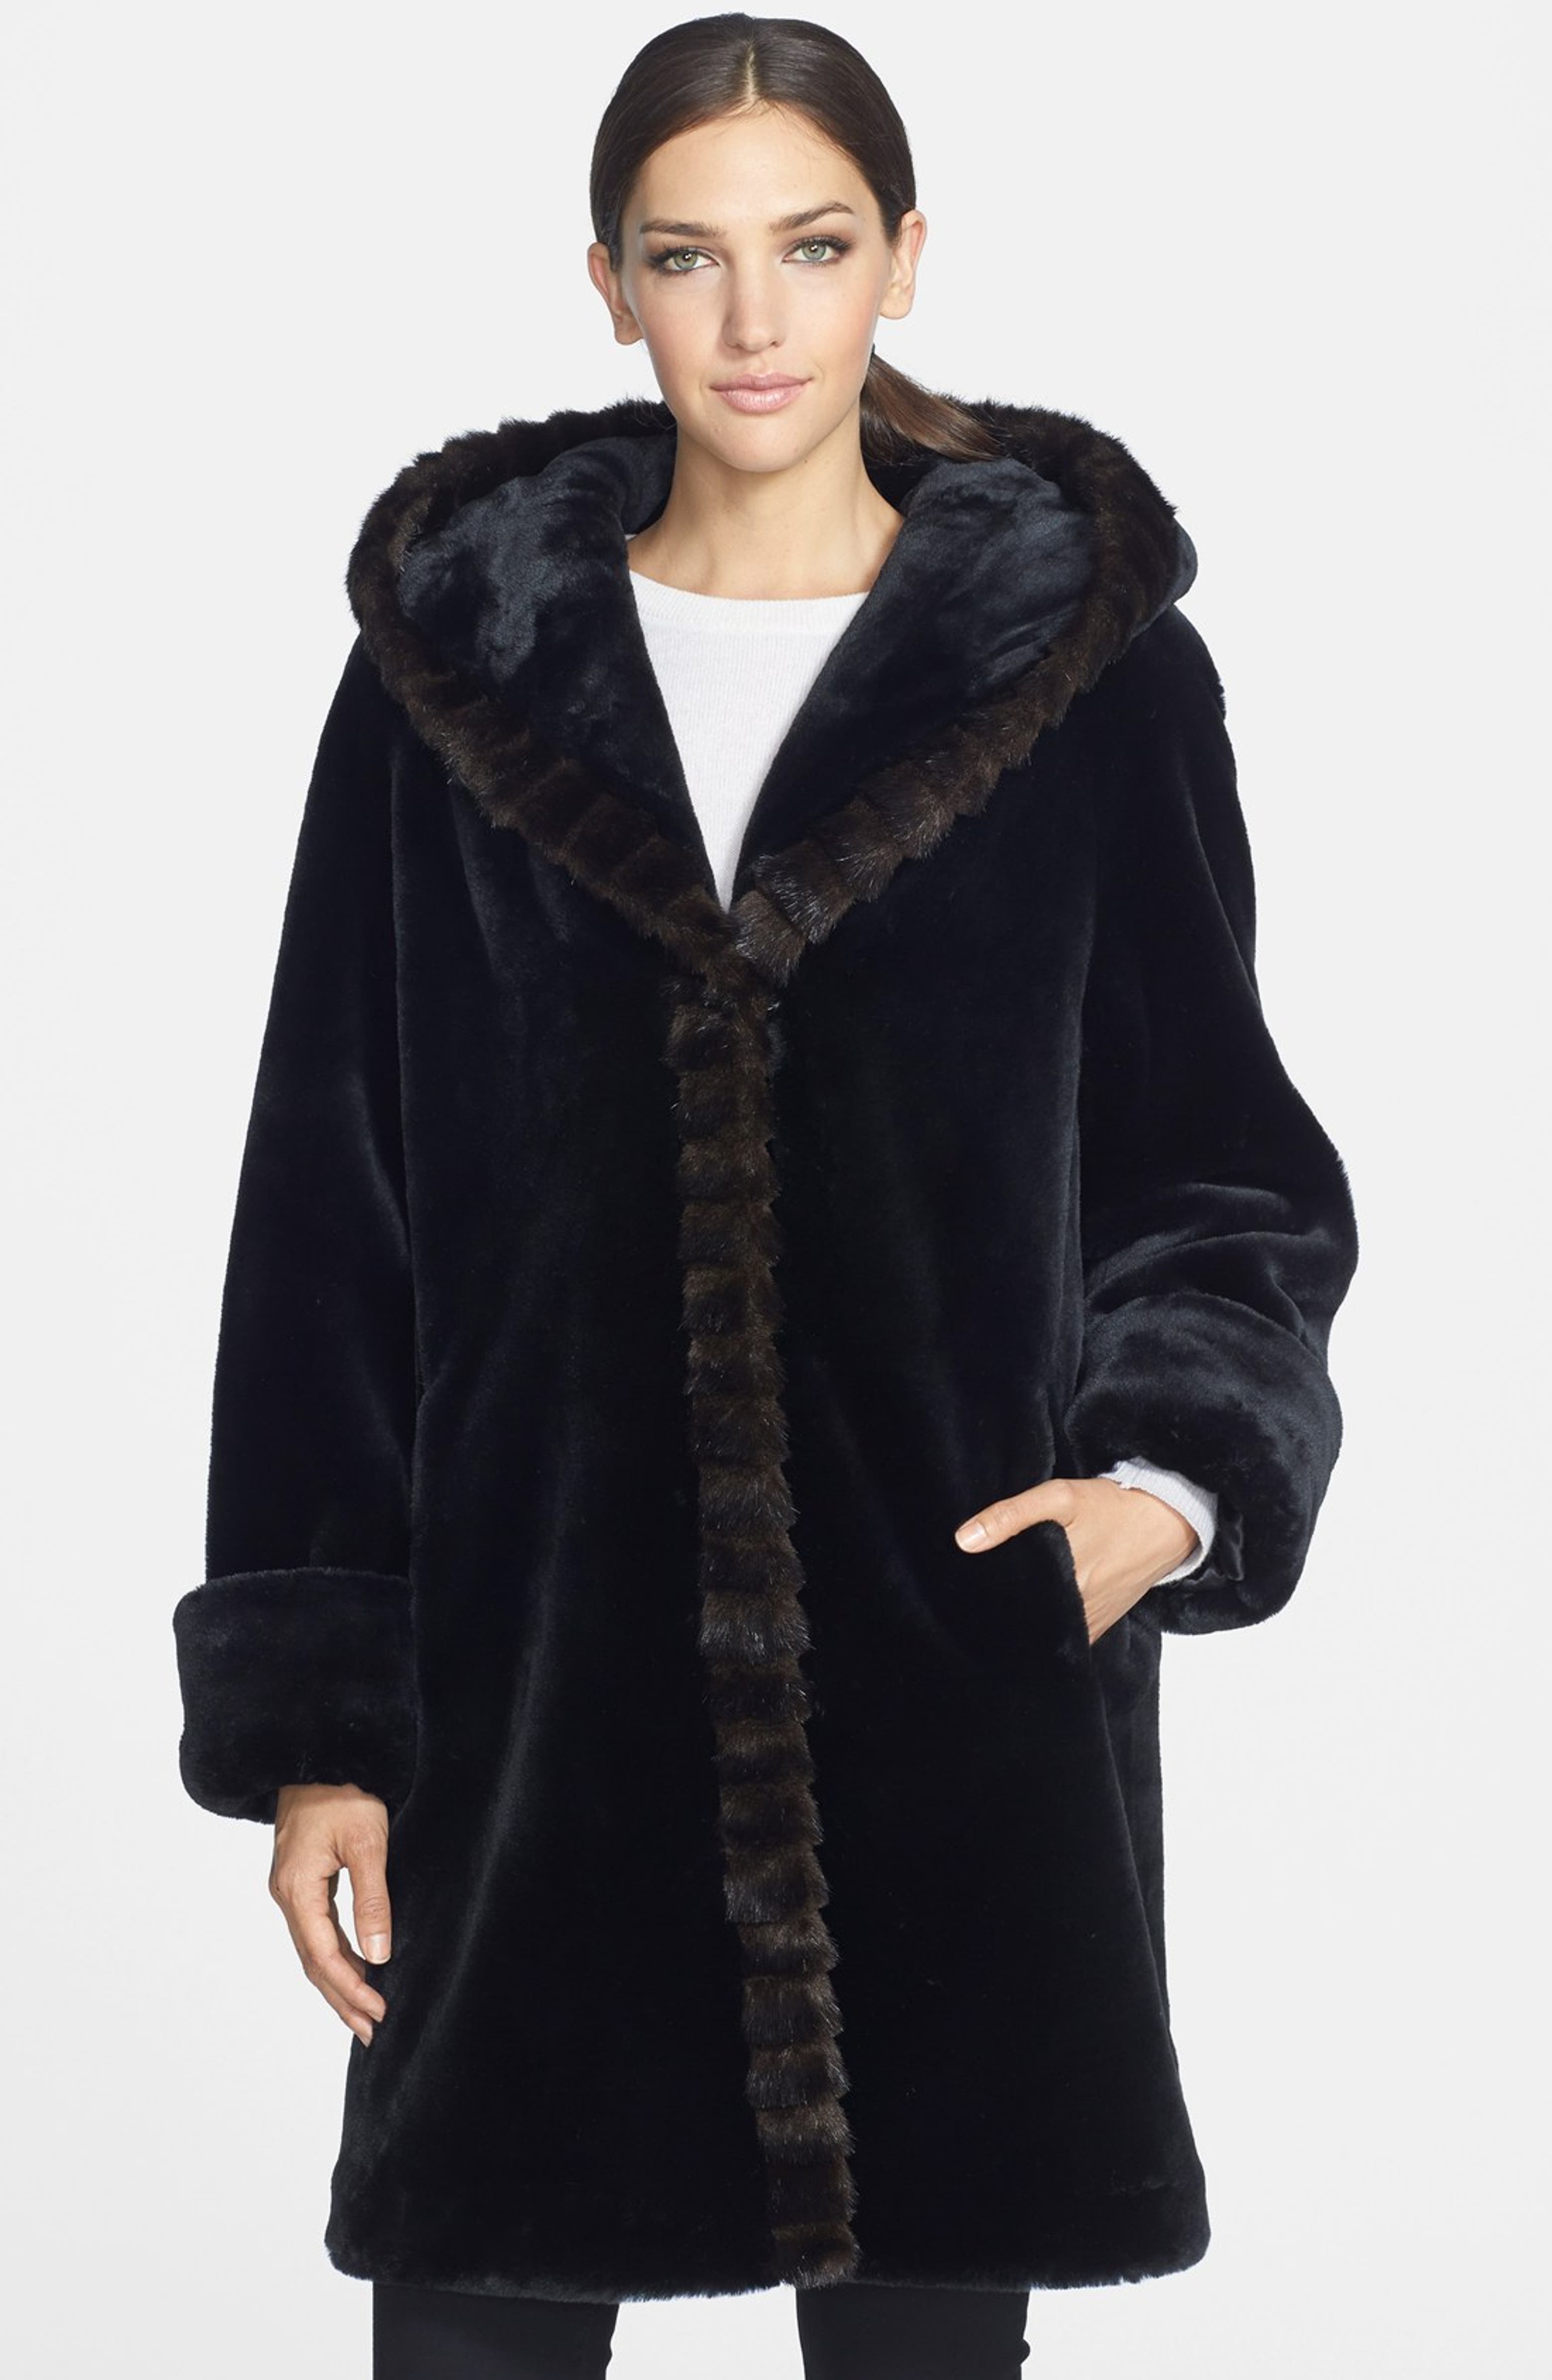 Gallery Hooded Faux Fur Walking Coat Online Only